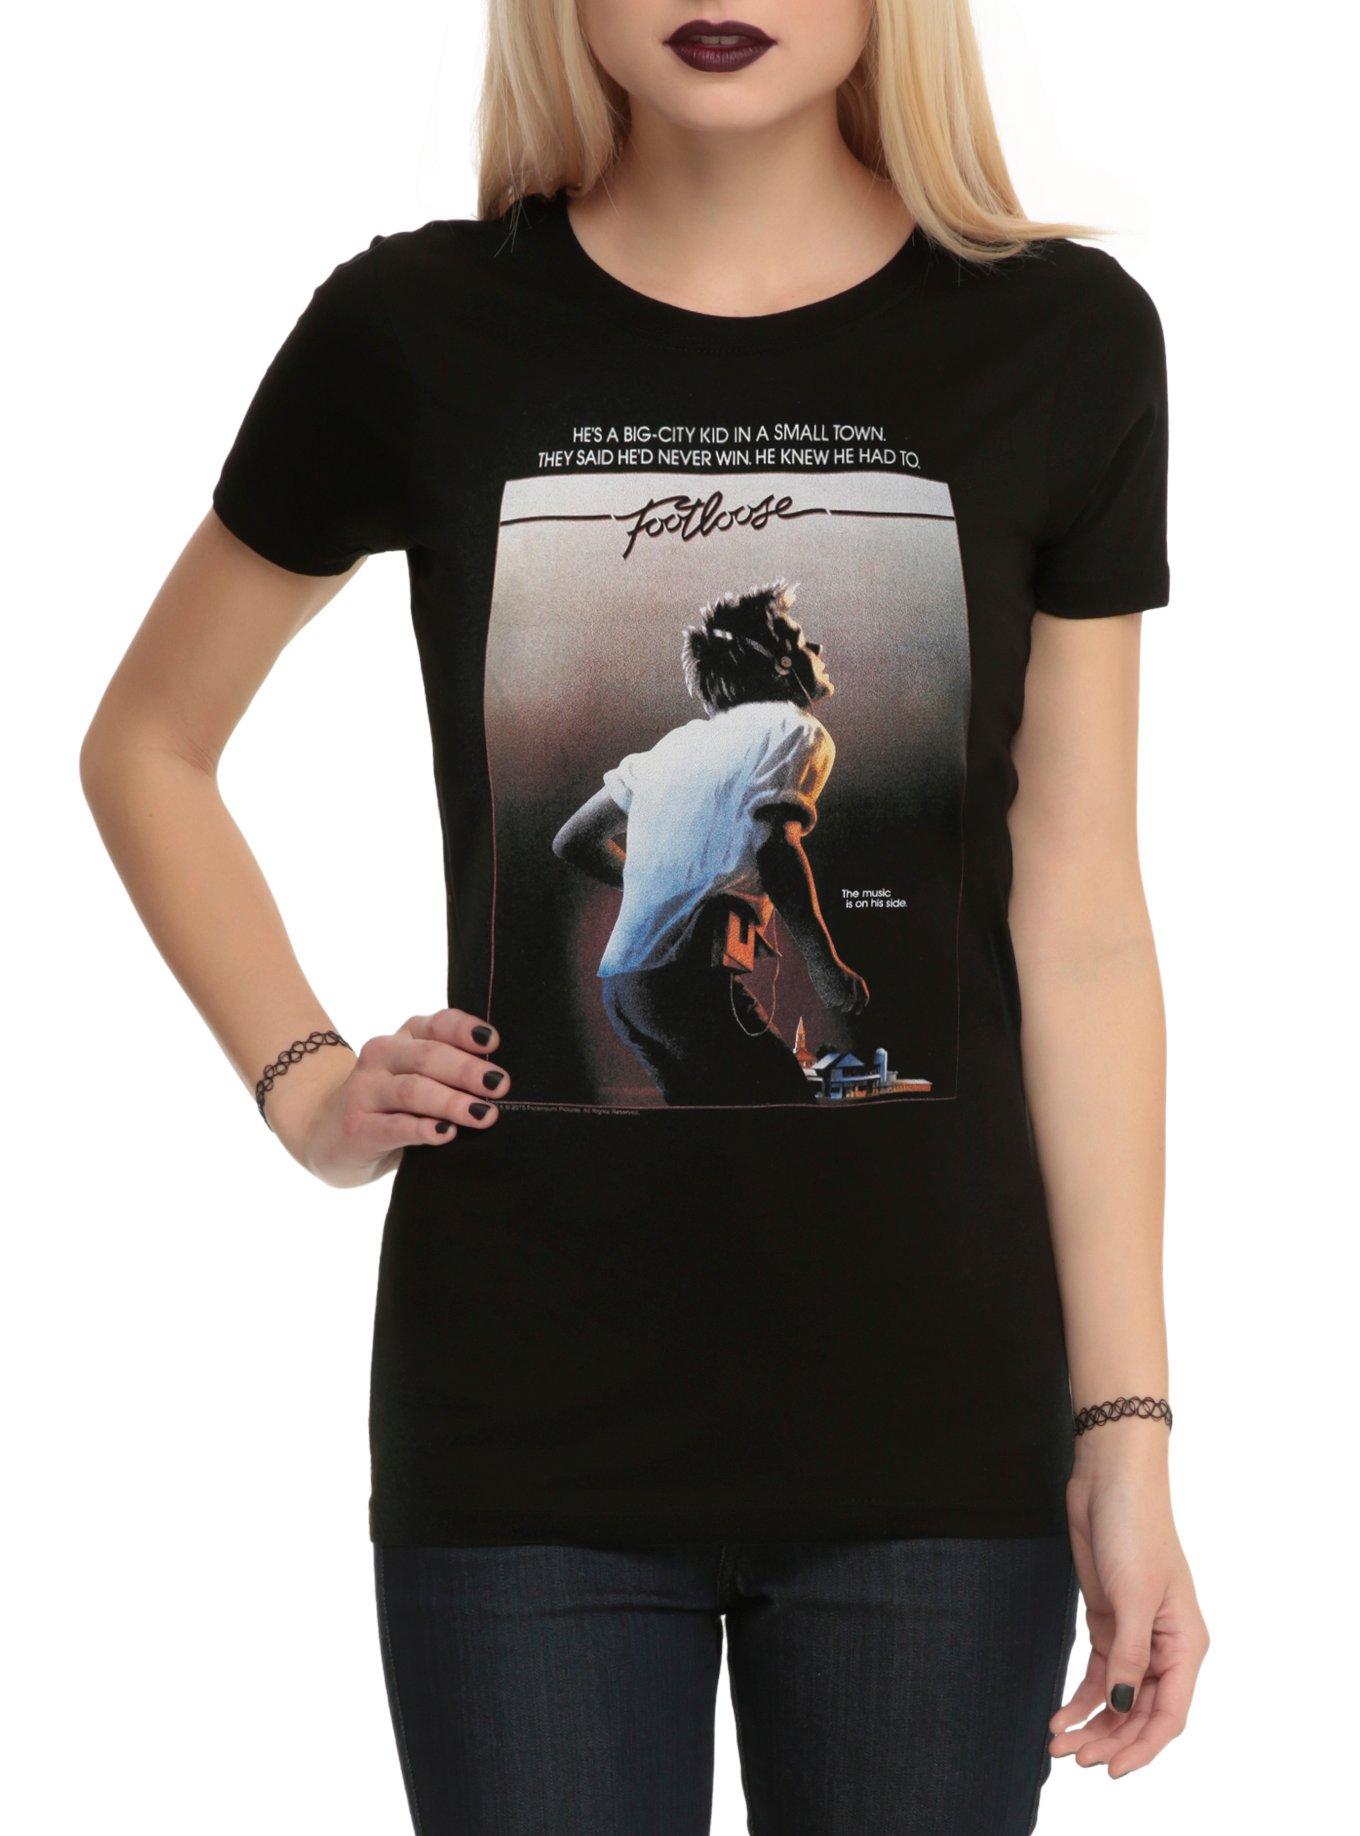 Footloose Poster Girls T-Shirt | Hot Topic